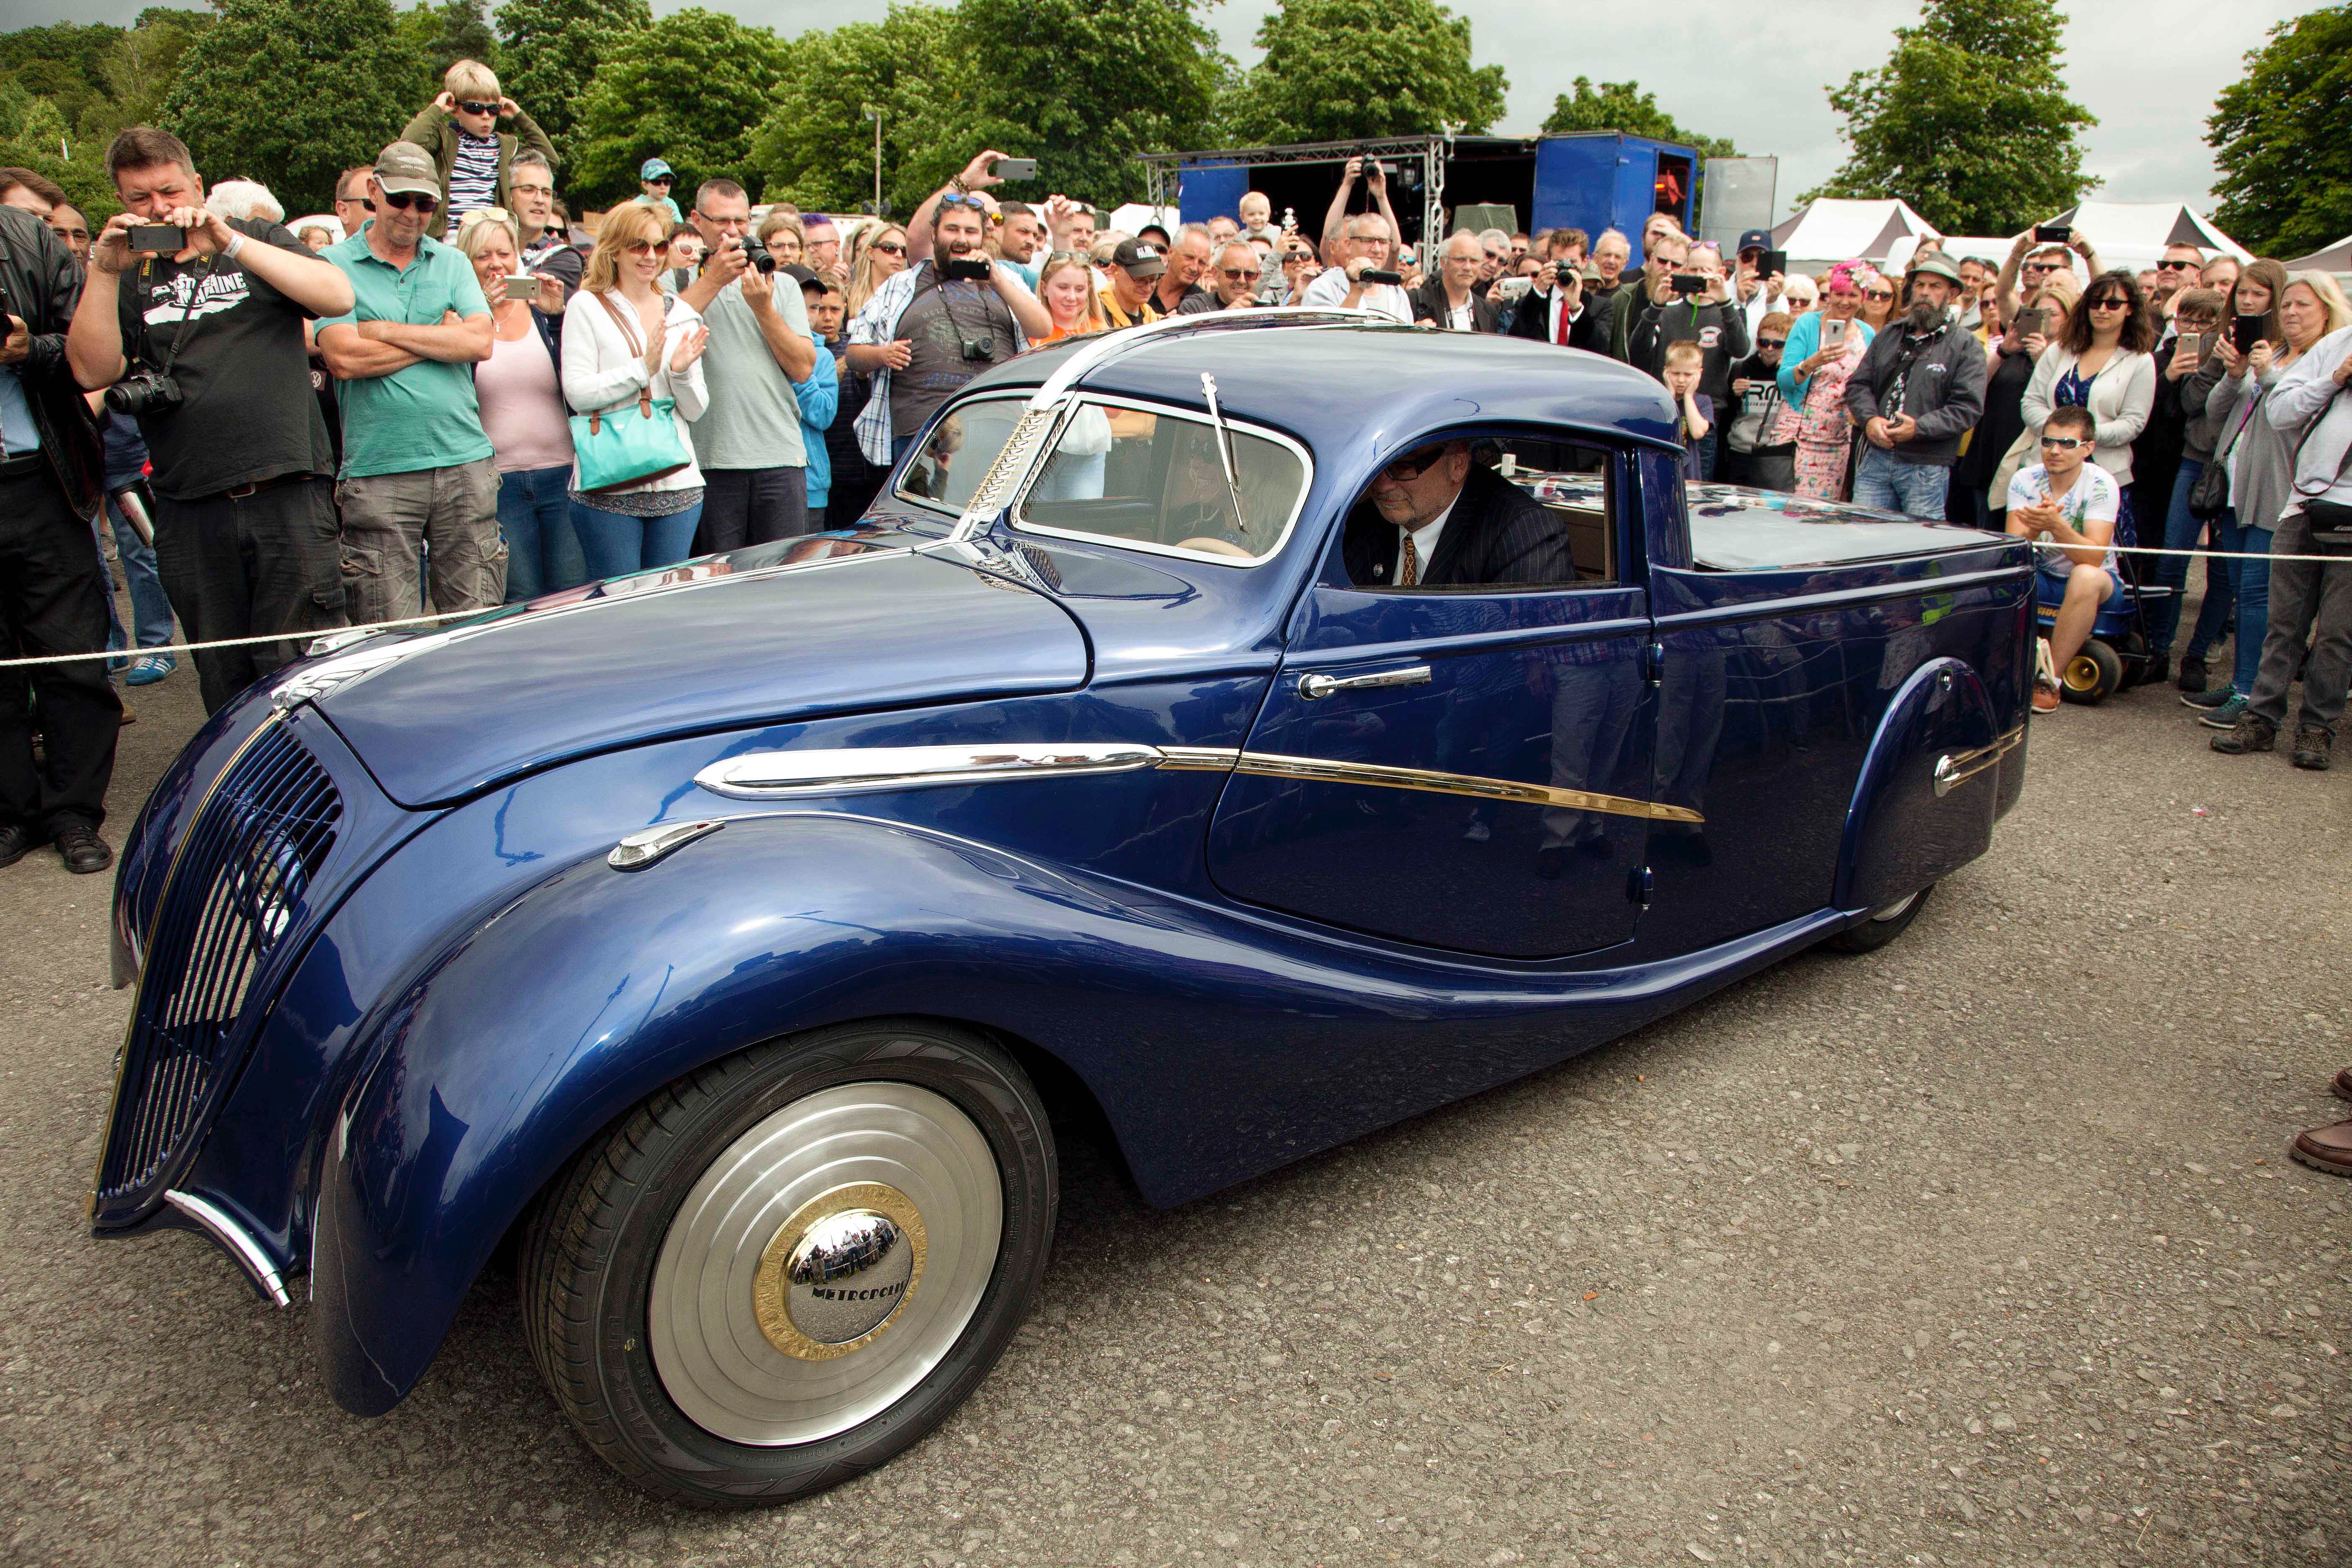 Car museums, Beaulieu features hot rods and custom cars at summer exhibit, ClassicCars.com Journal